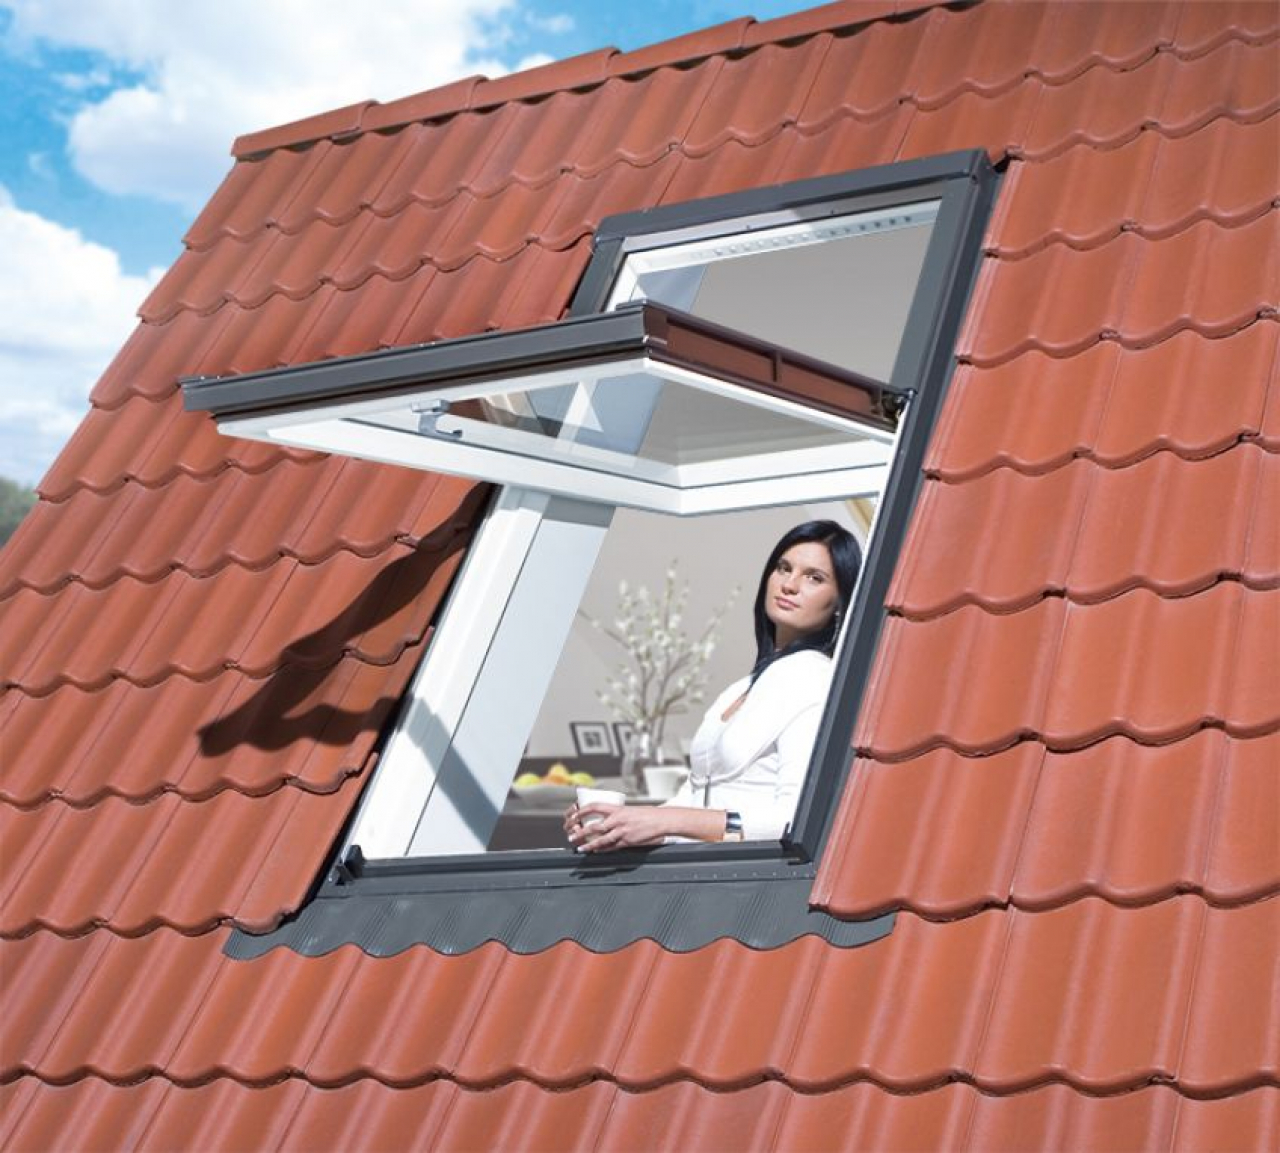 Fakro FYU-V U3 proSky Megemelt forgástengelyű tetőtéri ablakok